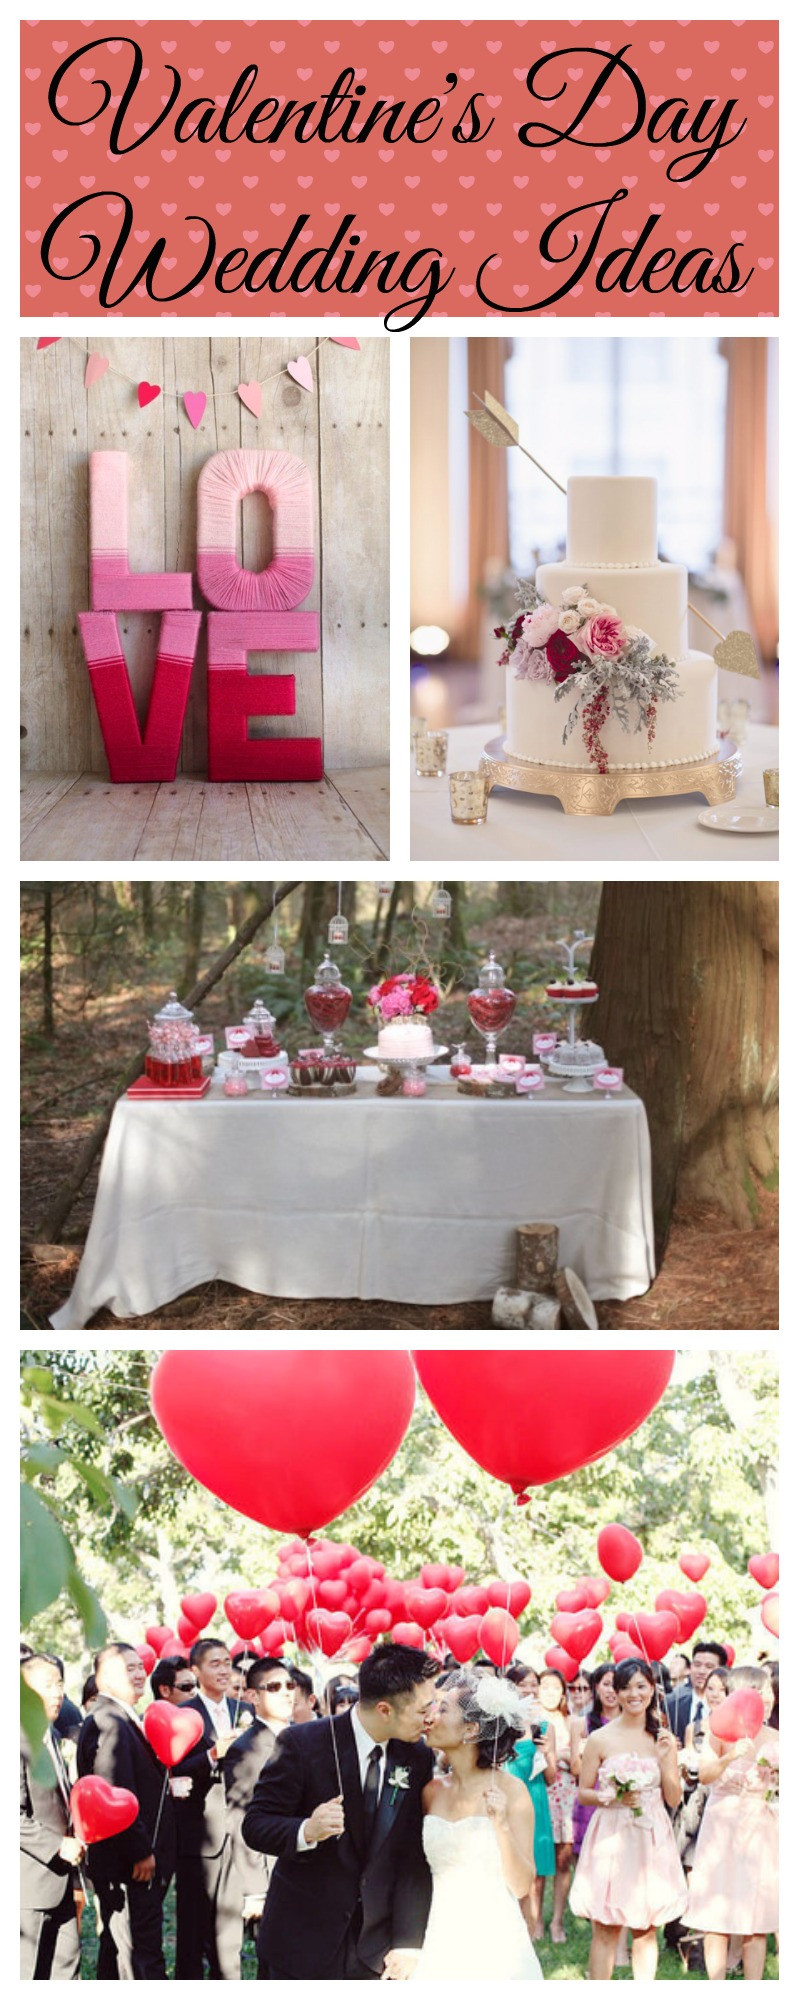 Valentines Day Wedding Ideas
 Valentine s Day Wedding Ideas Rustic Wedding Chic